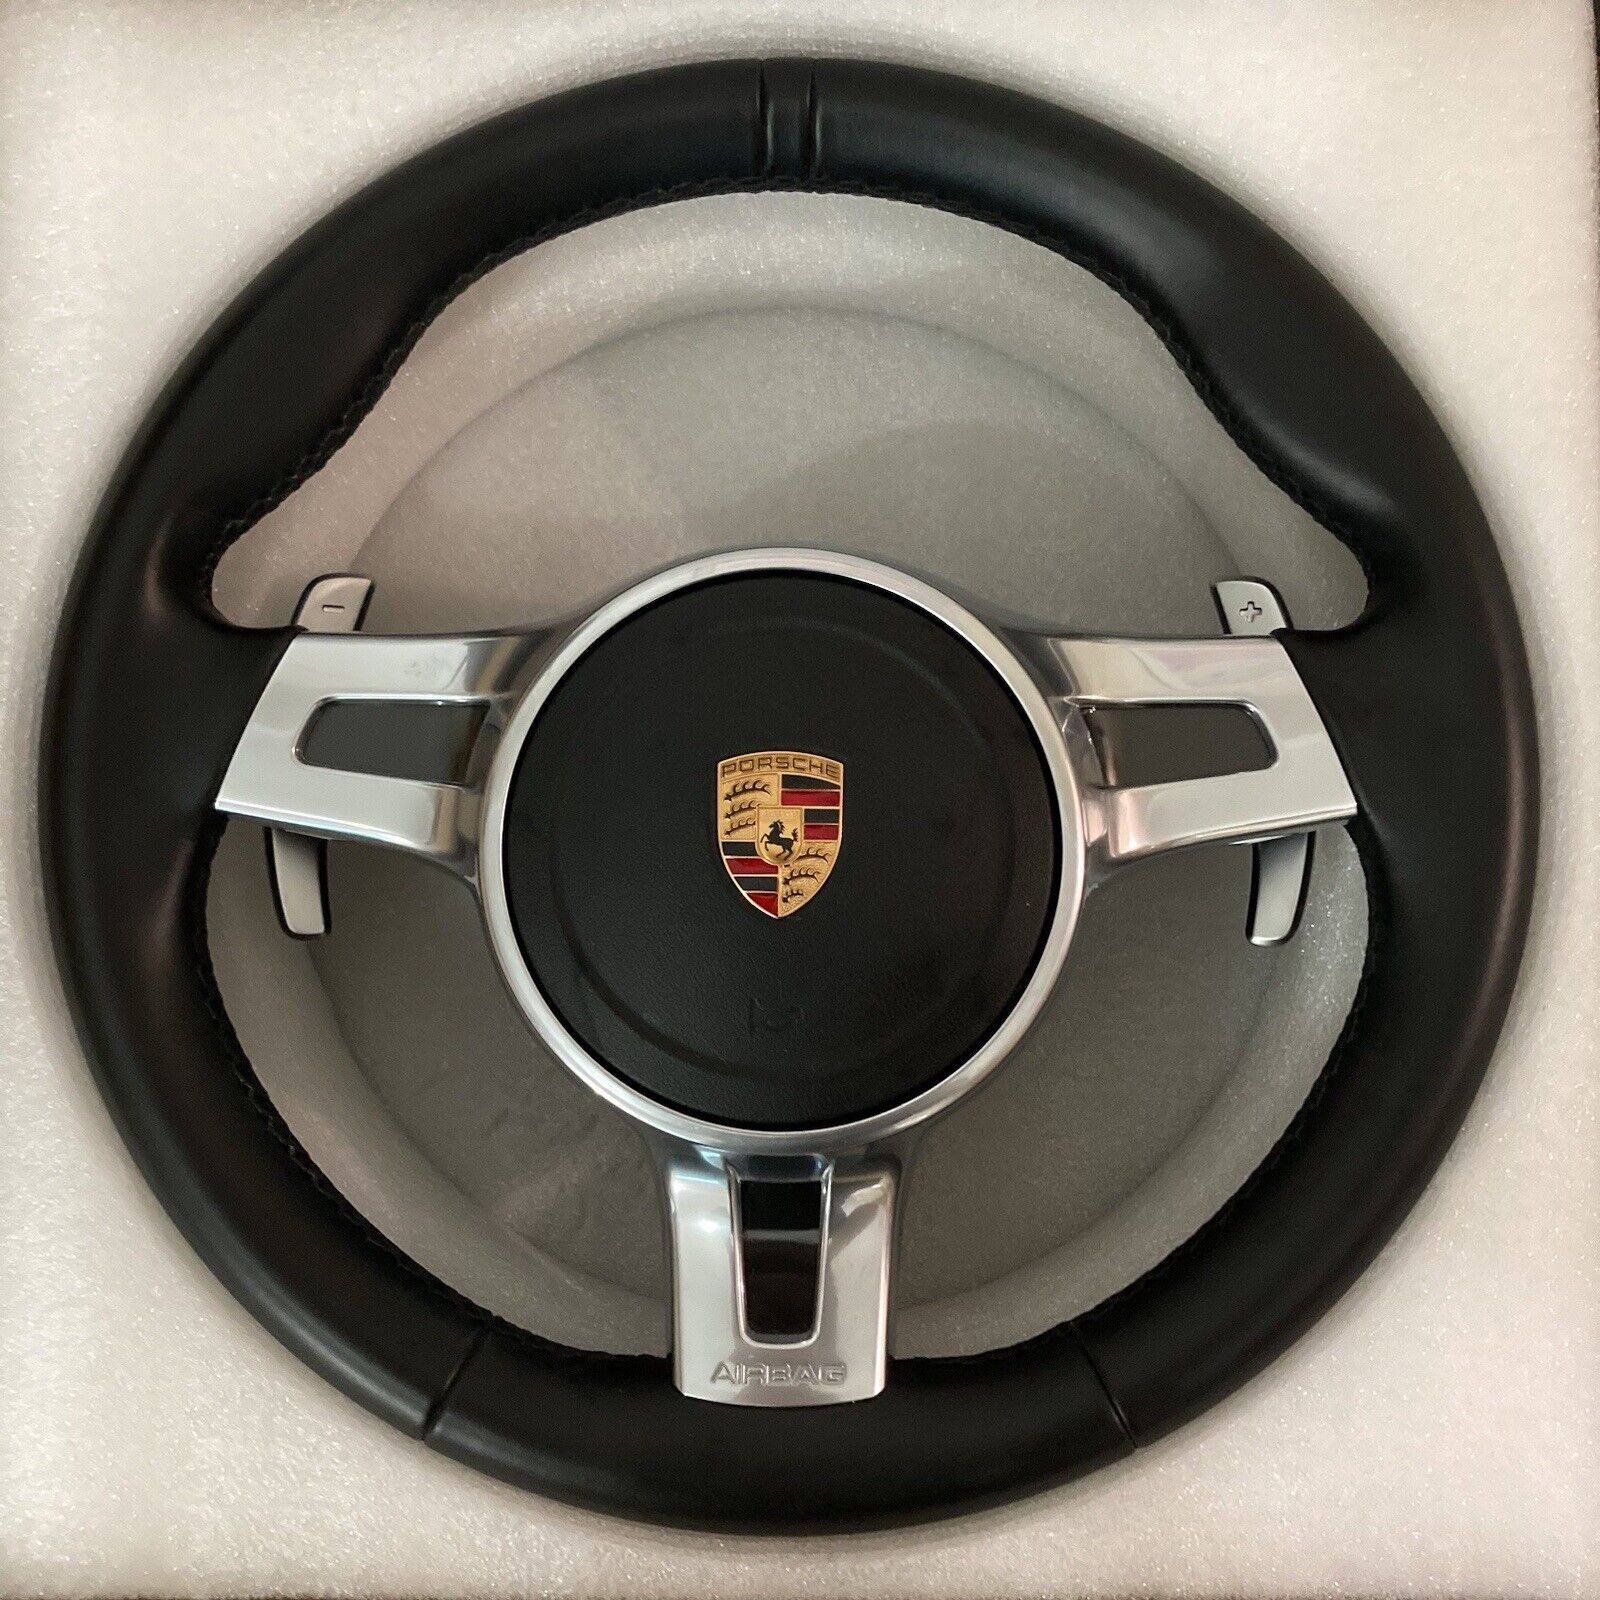 OEM Porsche Sport Design Black Leather Steering Wheel